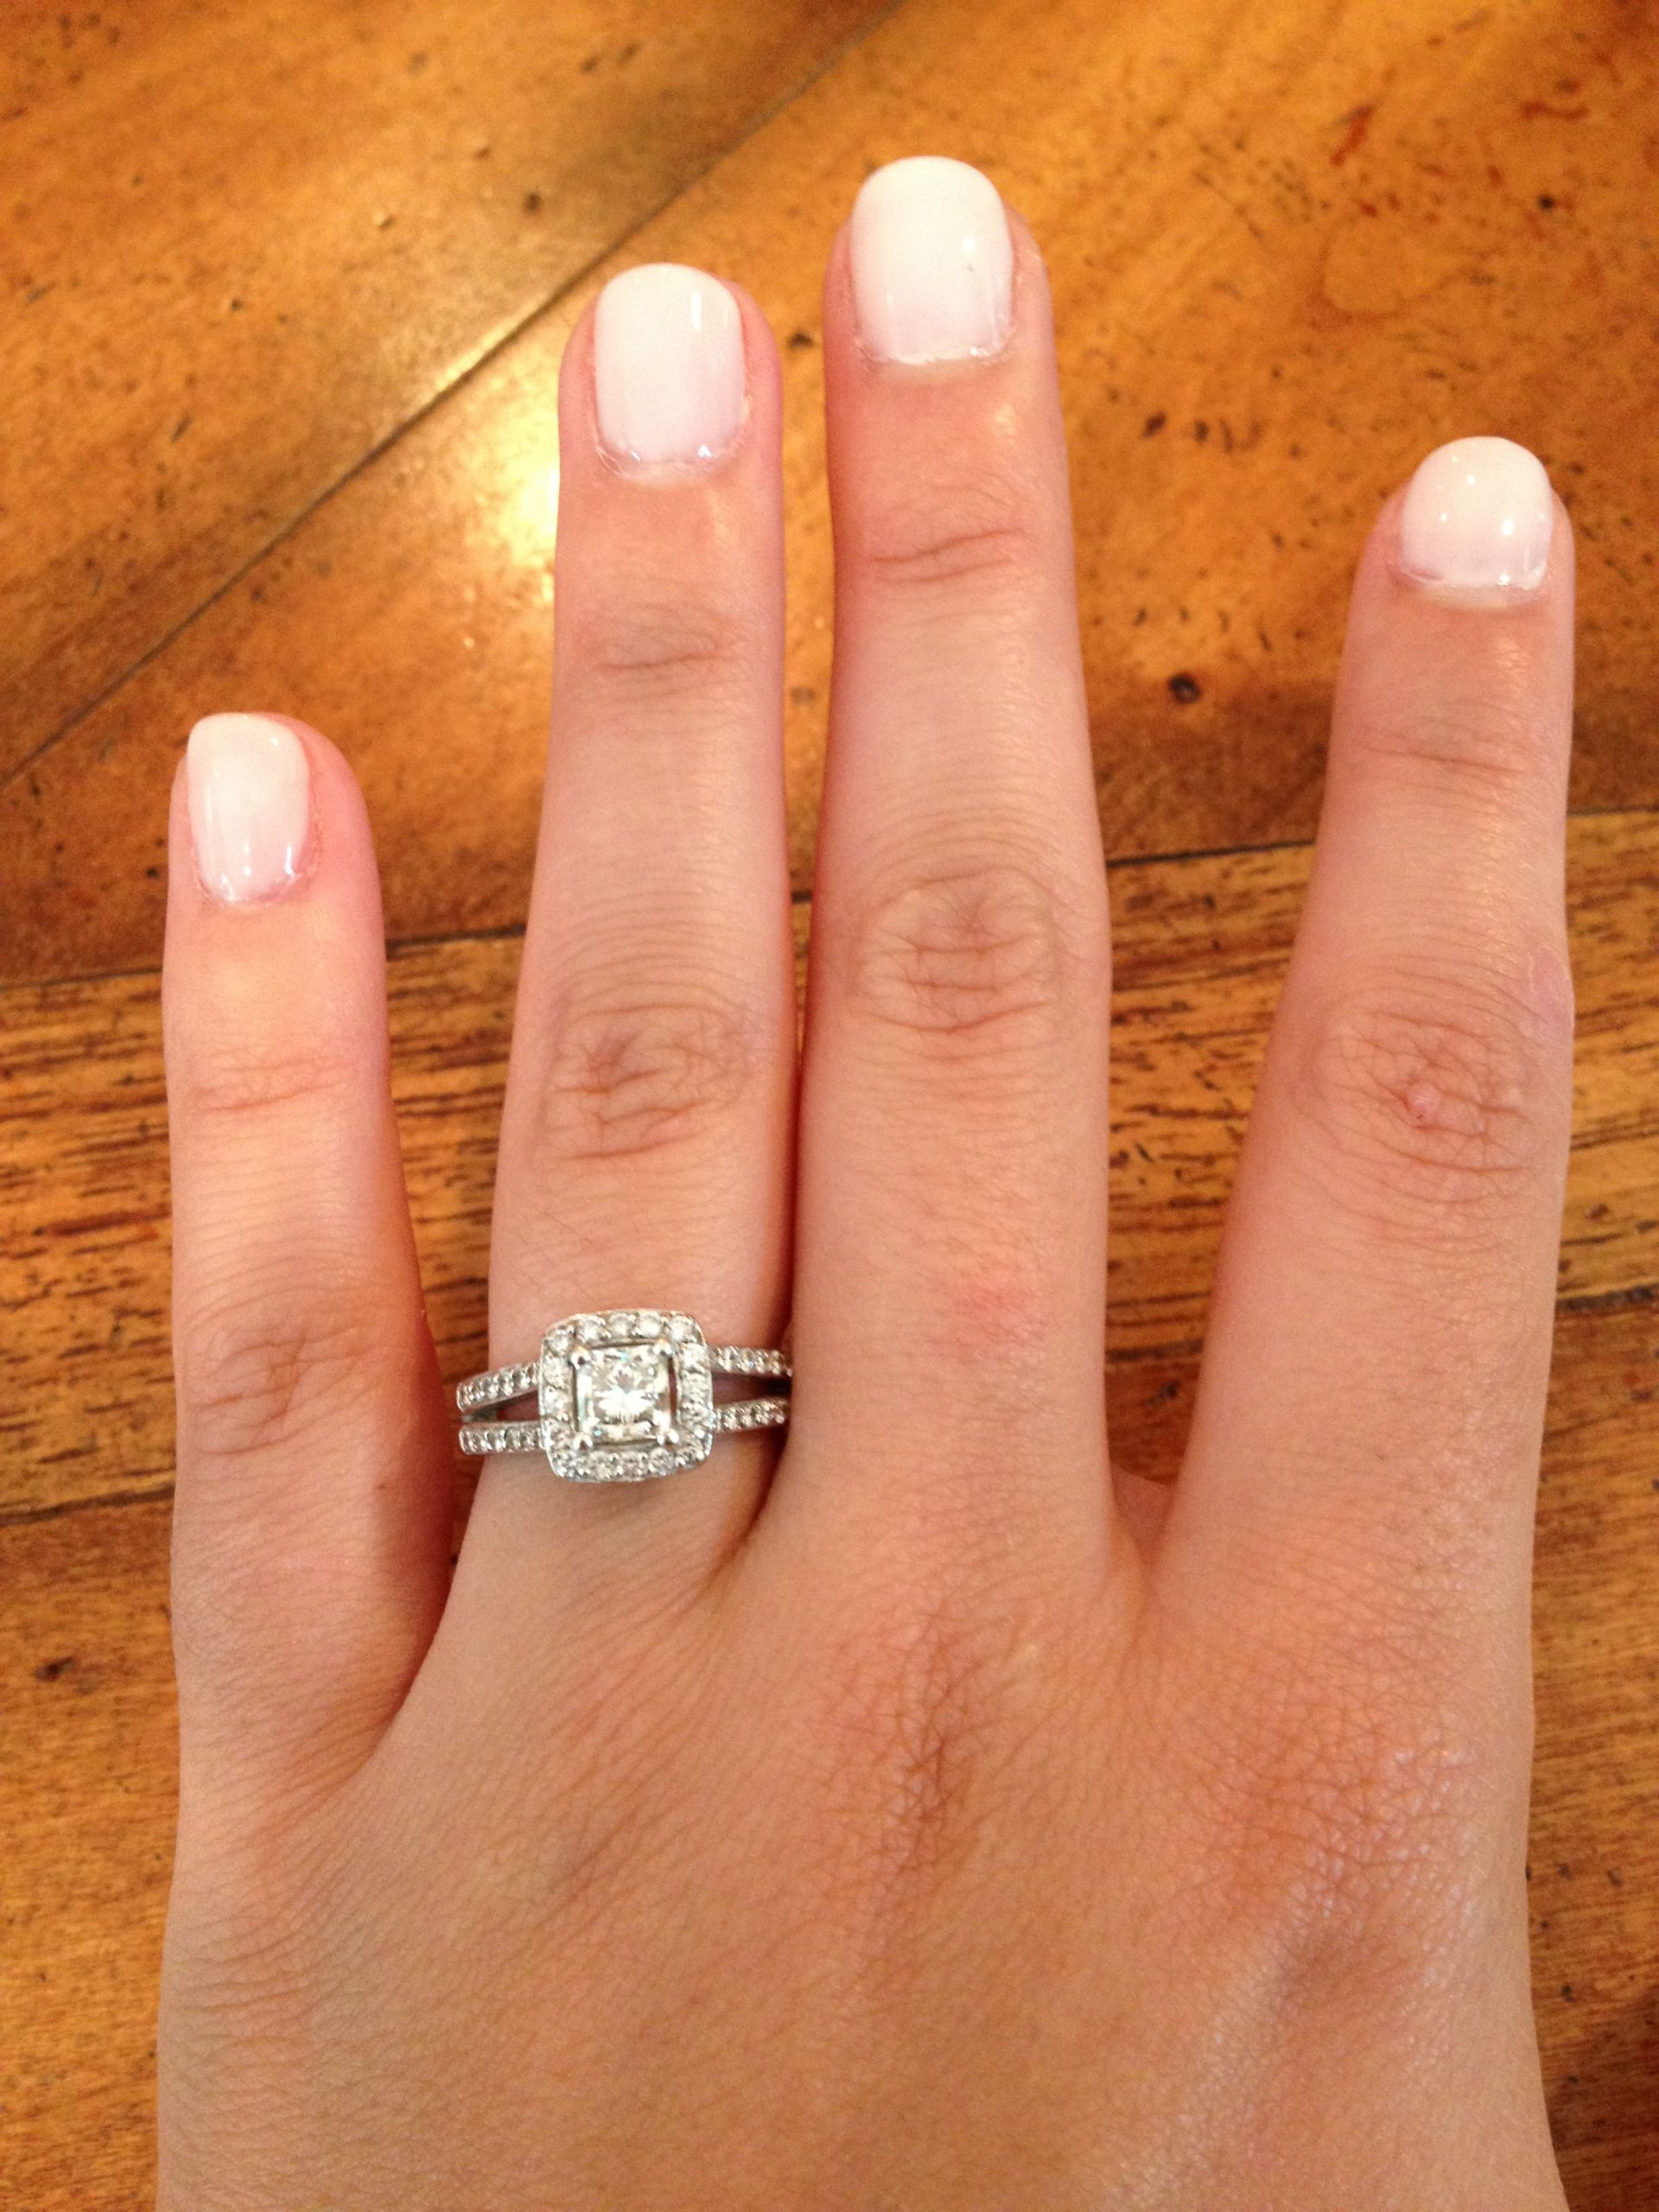 Perfect engagement ring and wedding day nail polish color.